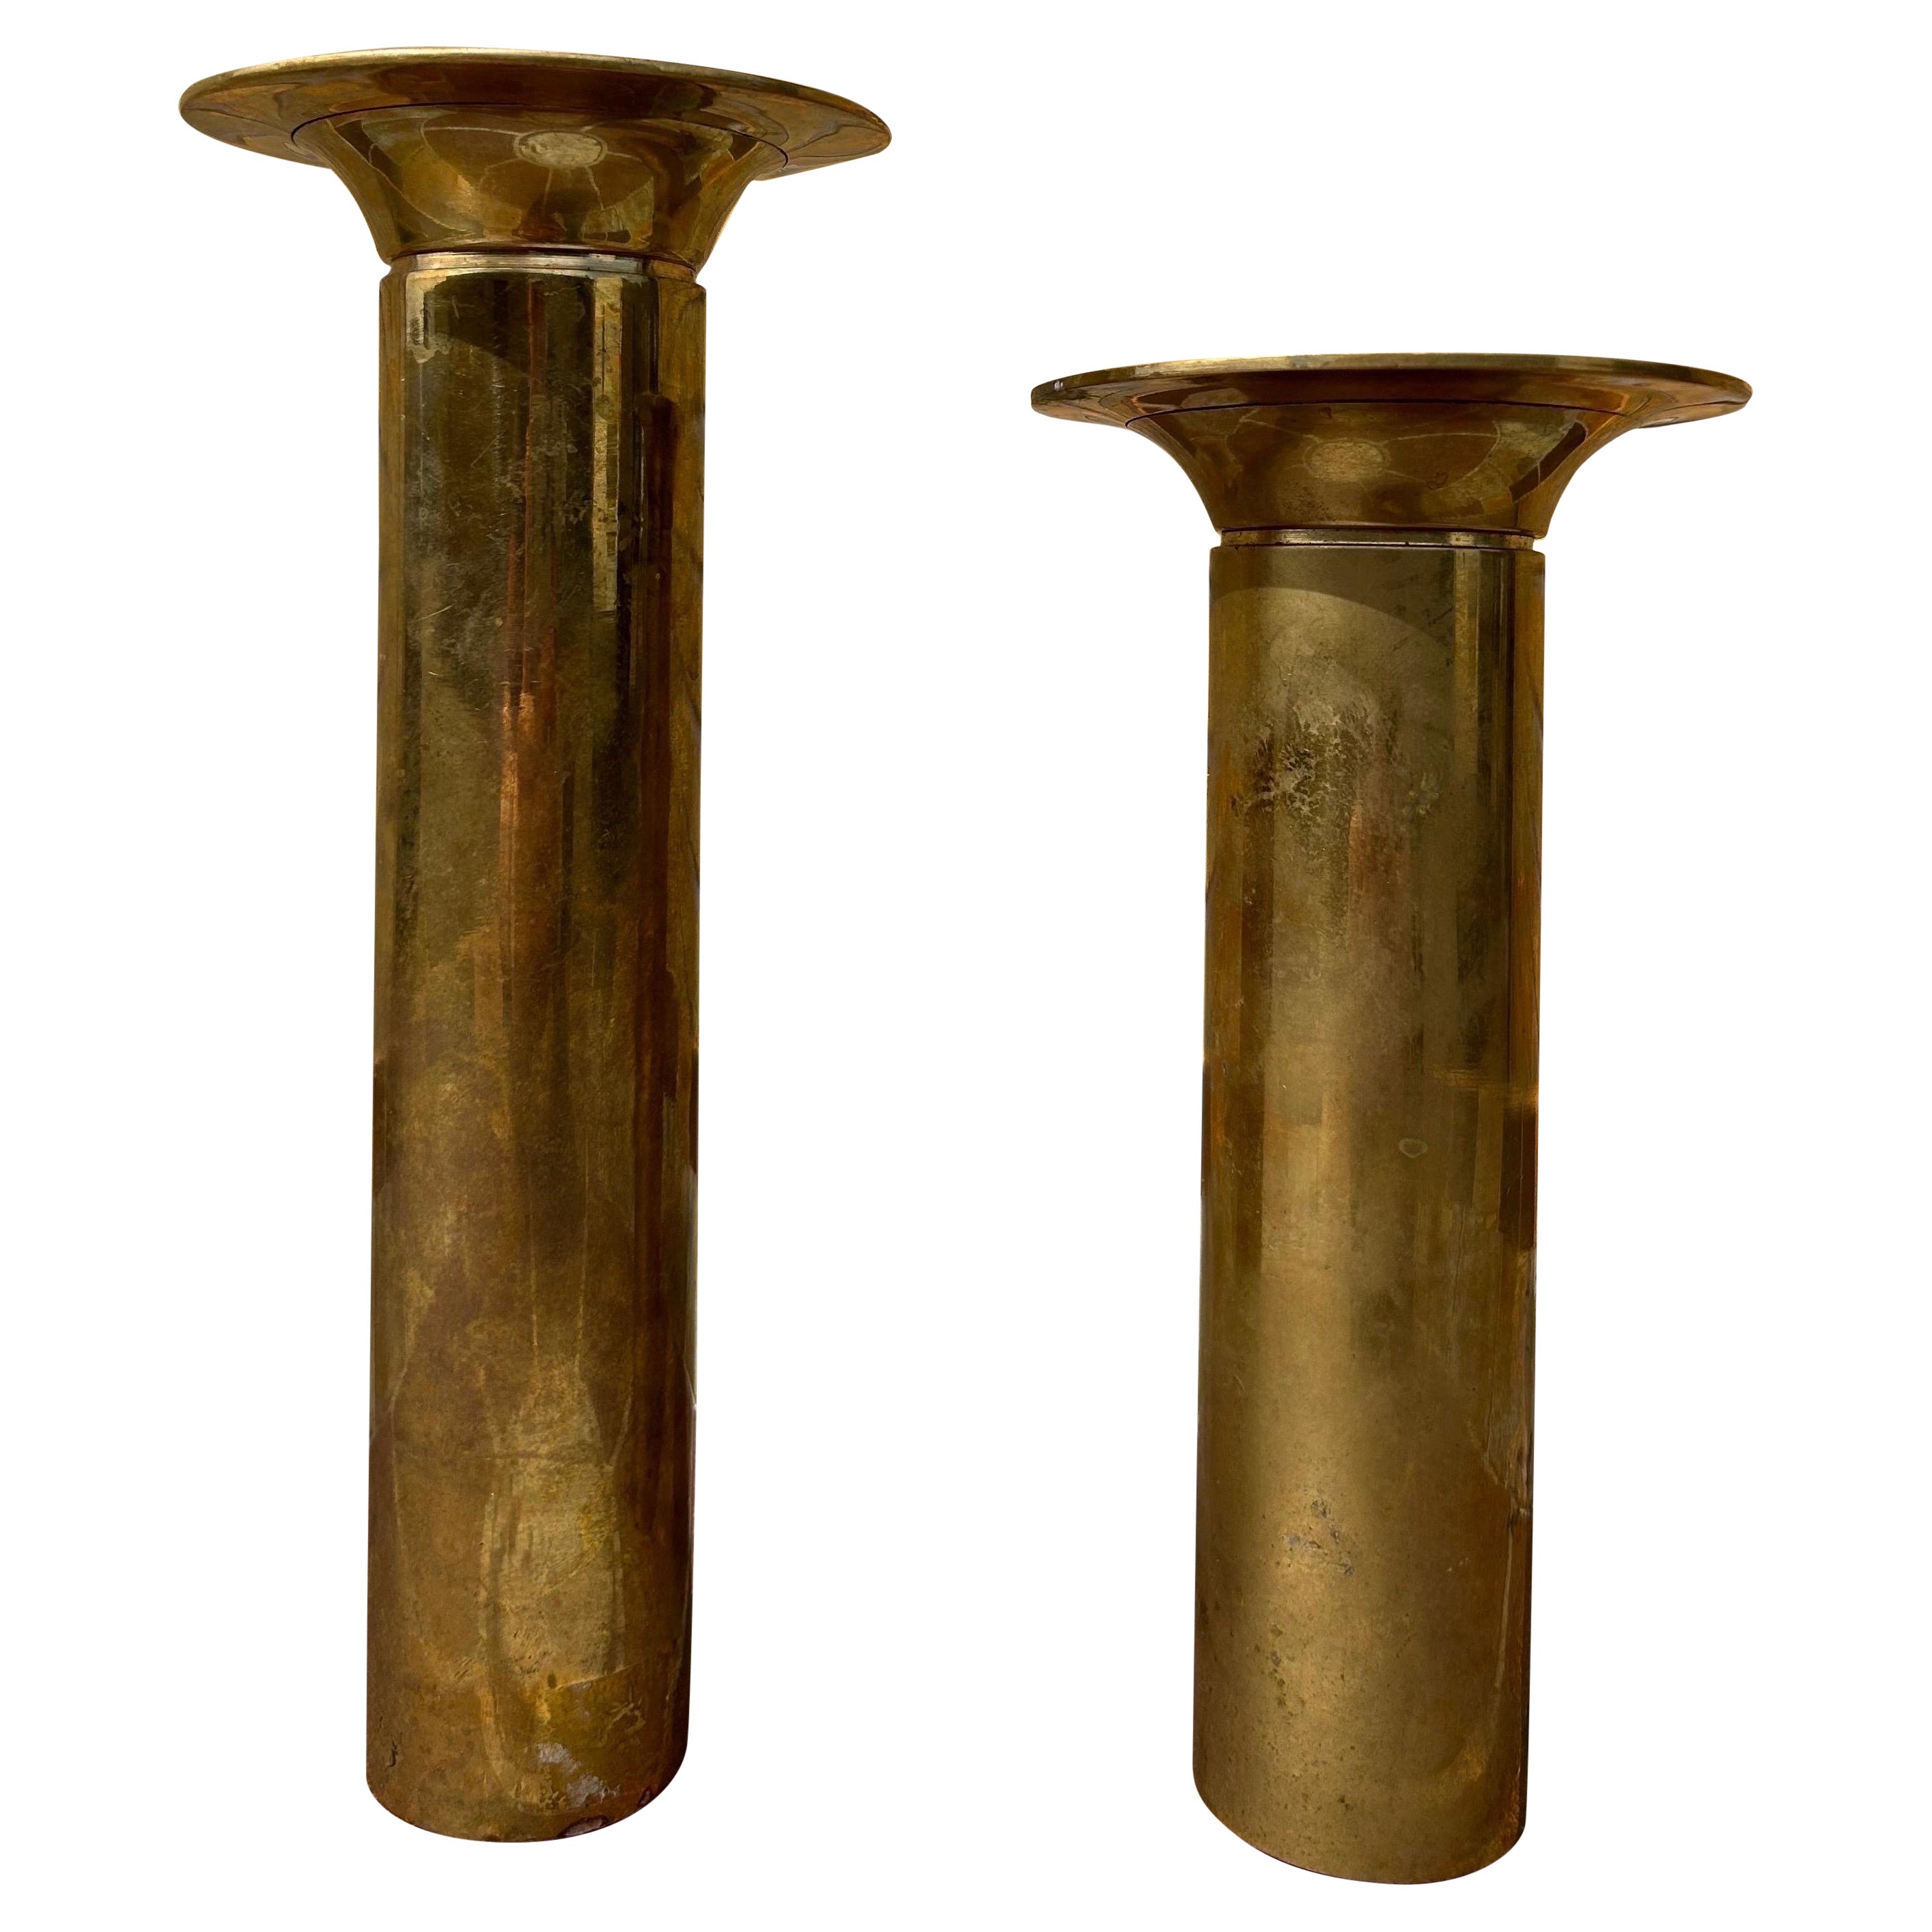 Pair of Torben Ørskov Candle Holders in Patinaed Brass